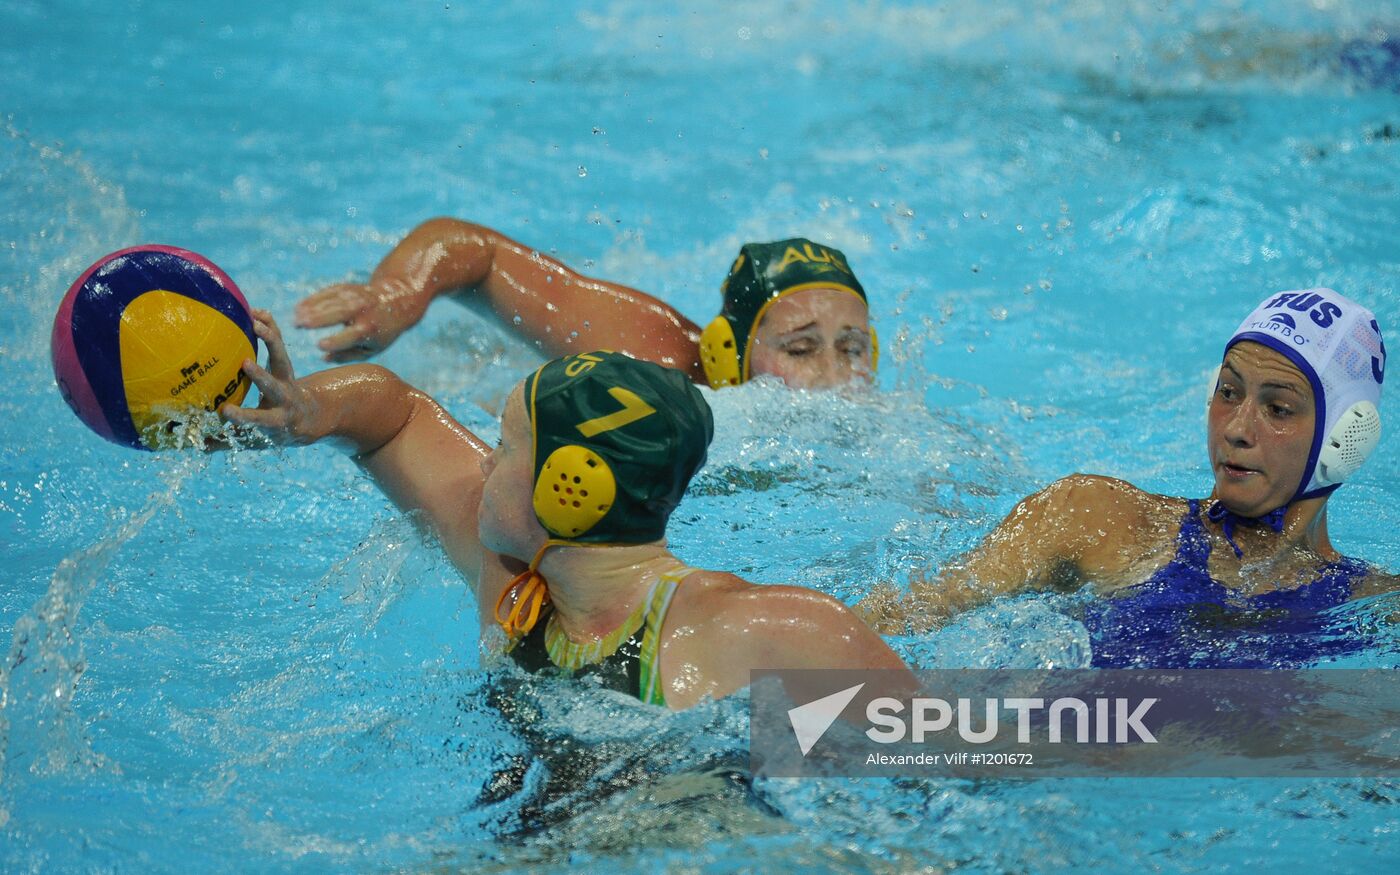 2012 Olympics. Women's Water Polo. Russia vs. Australia